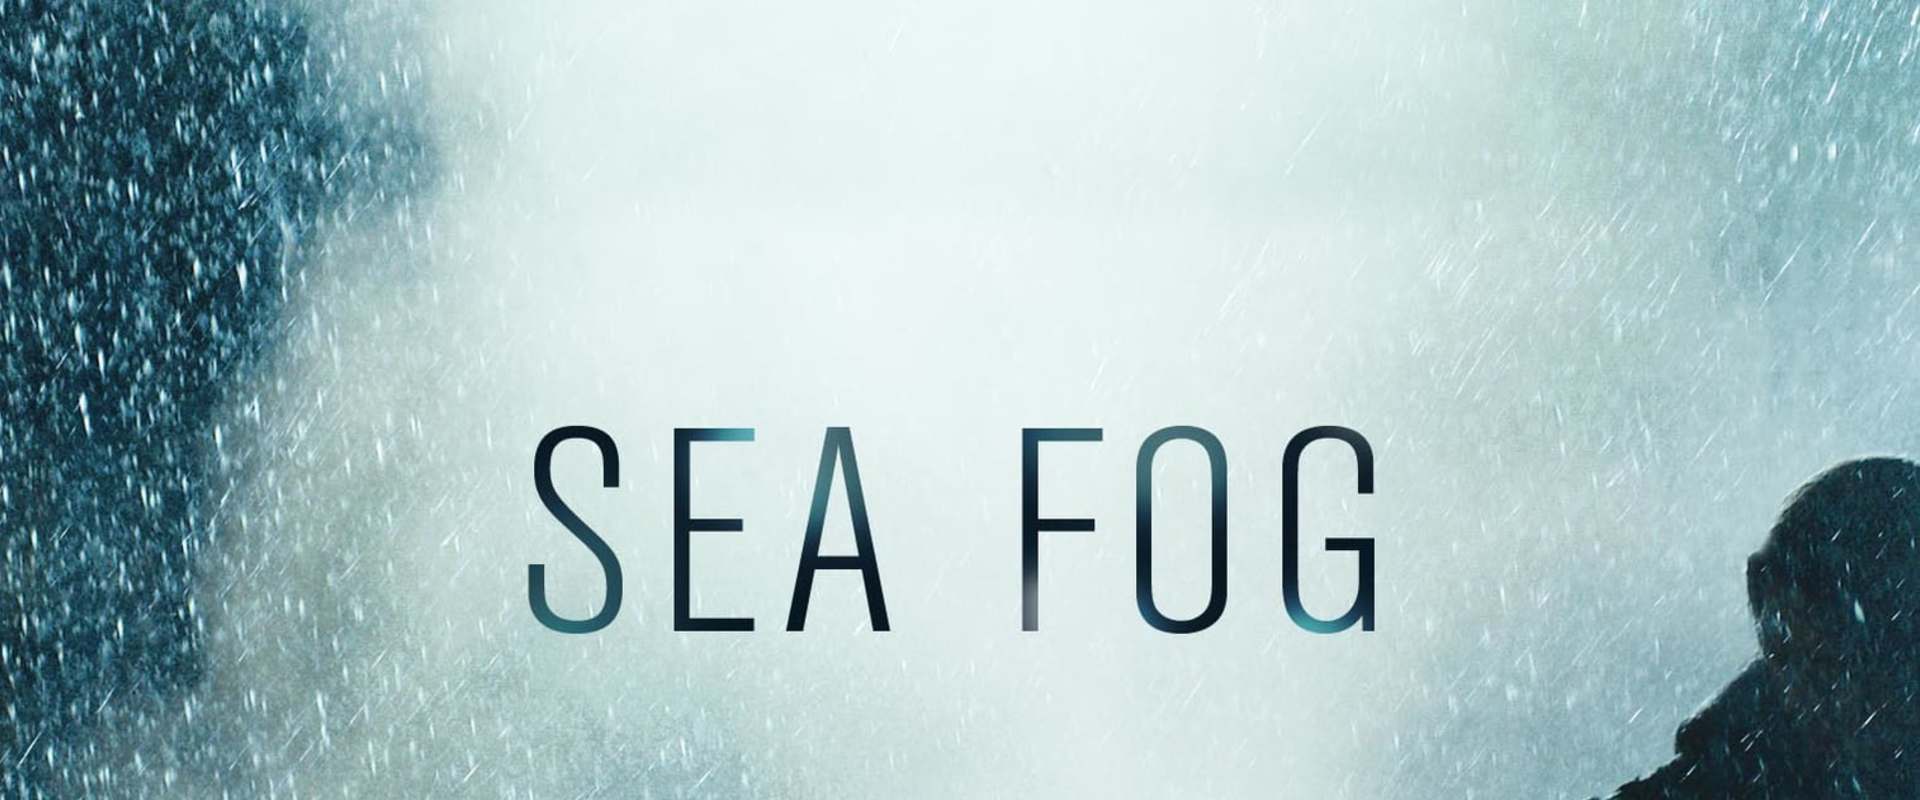 Sea Fog background 1